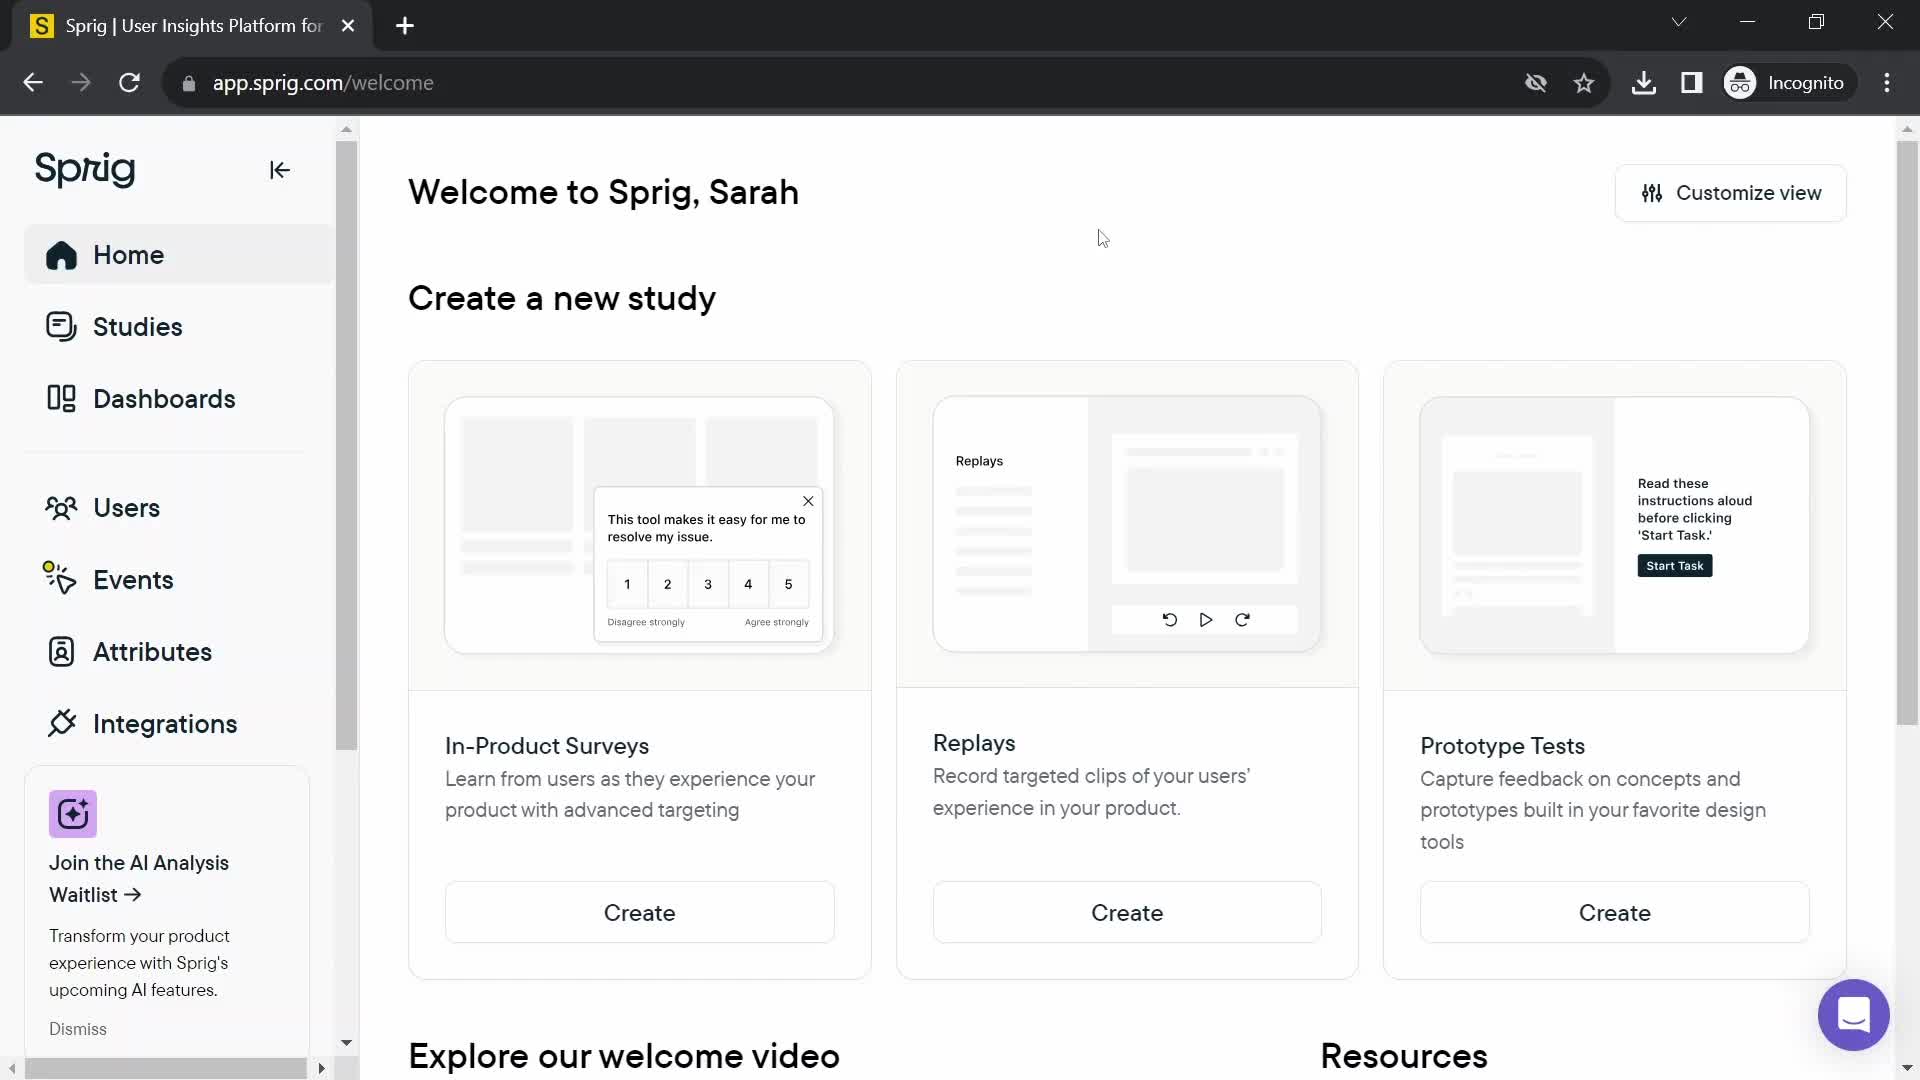 Screenshot of Home on General browsing on Sprig user flow